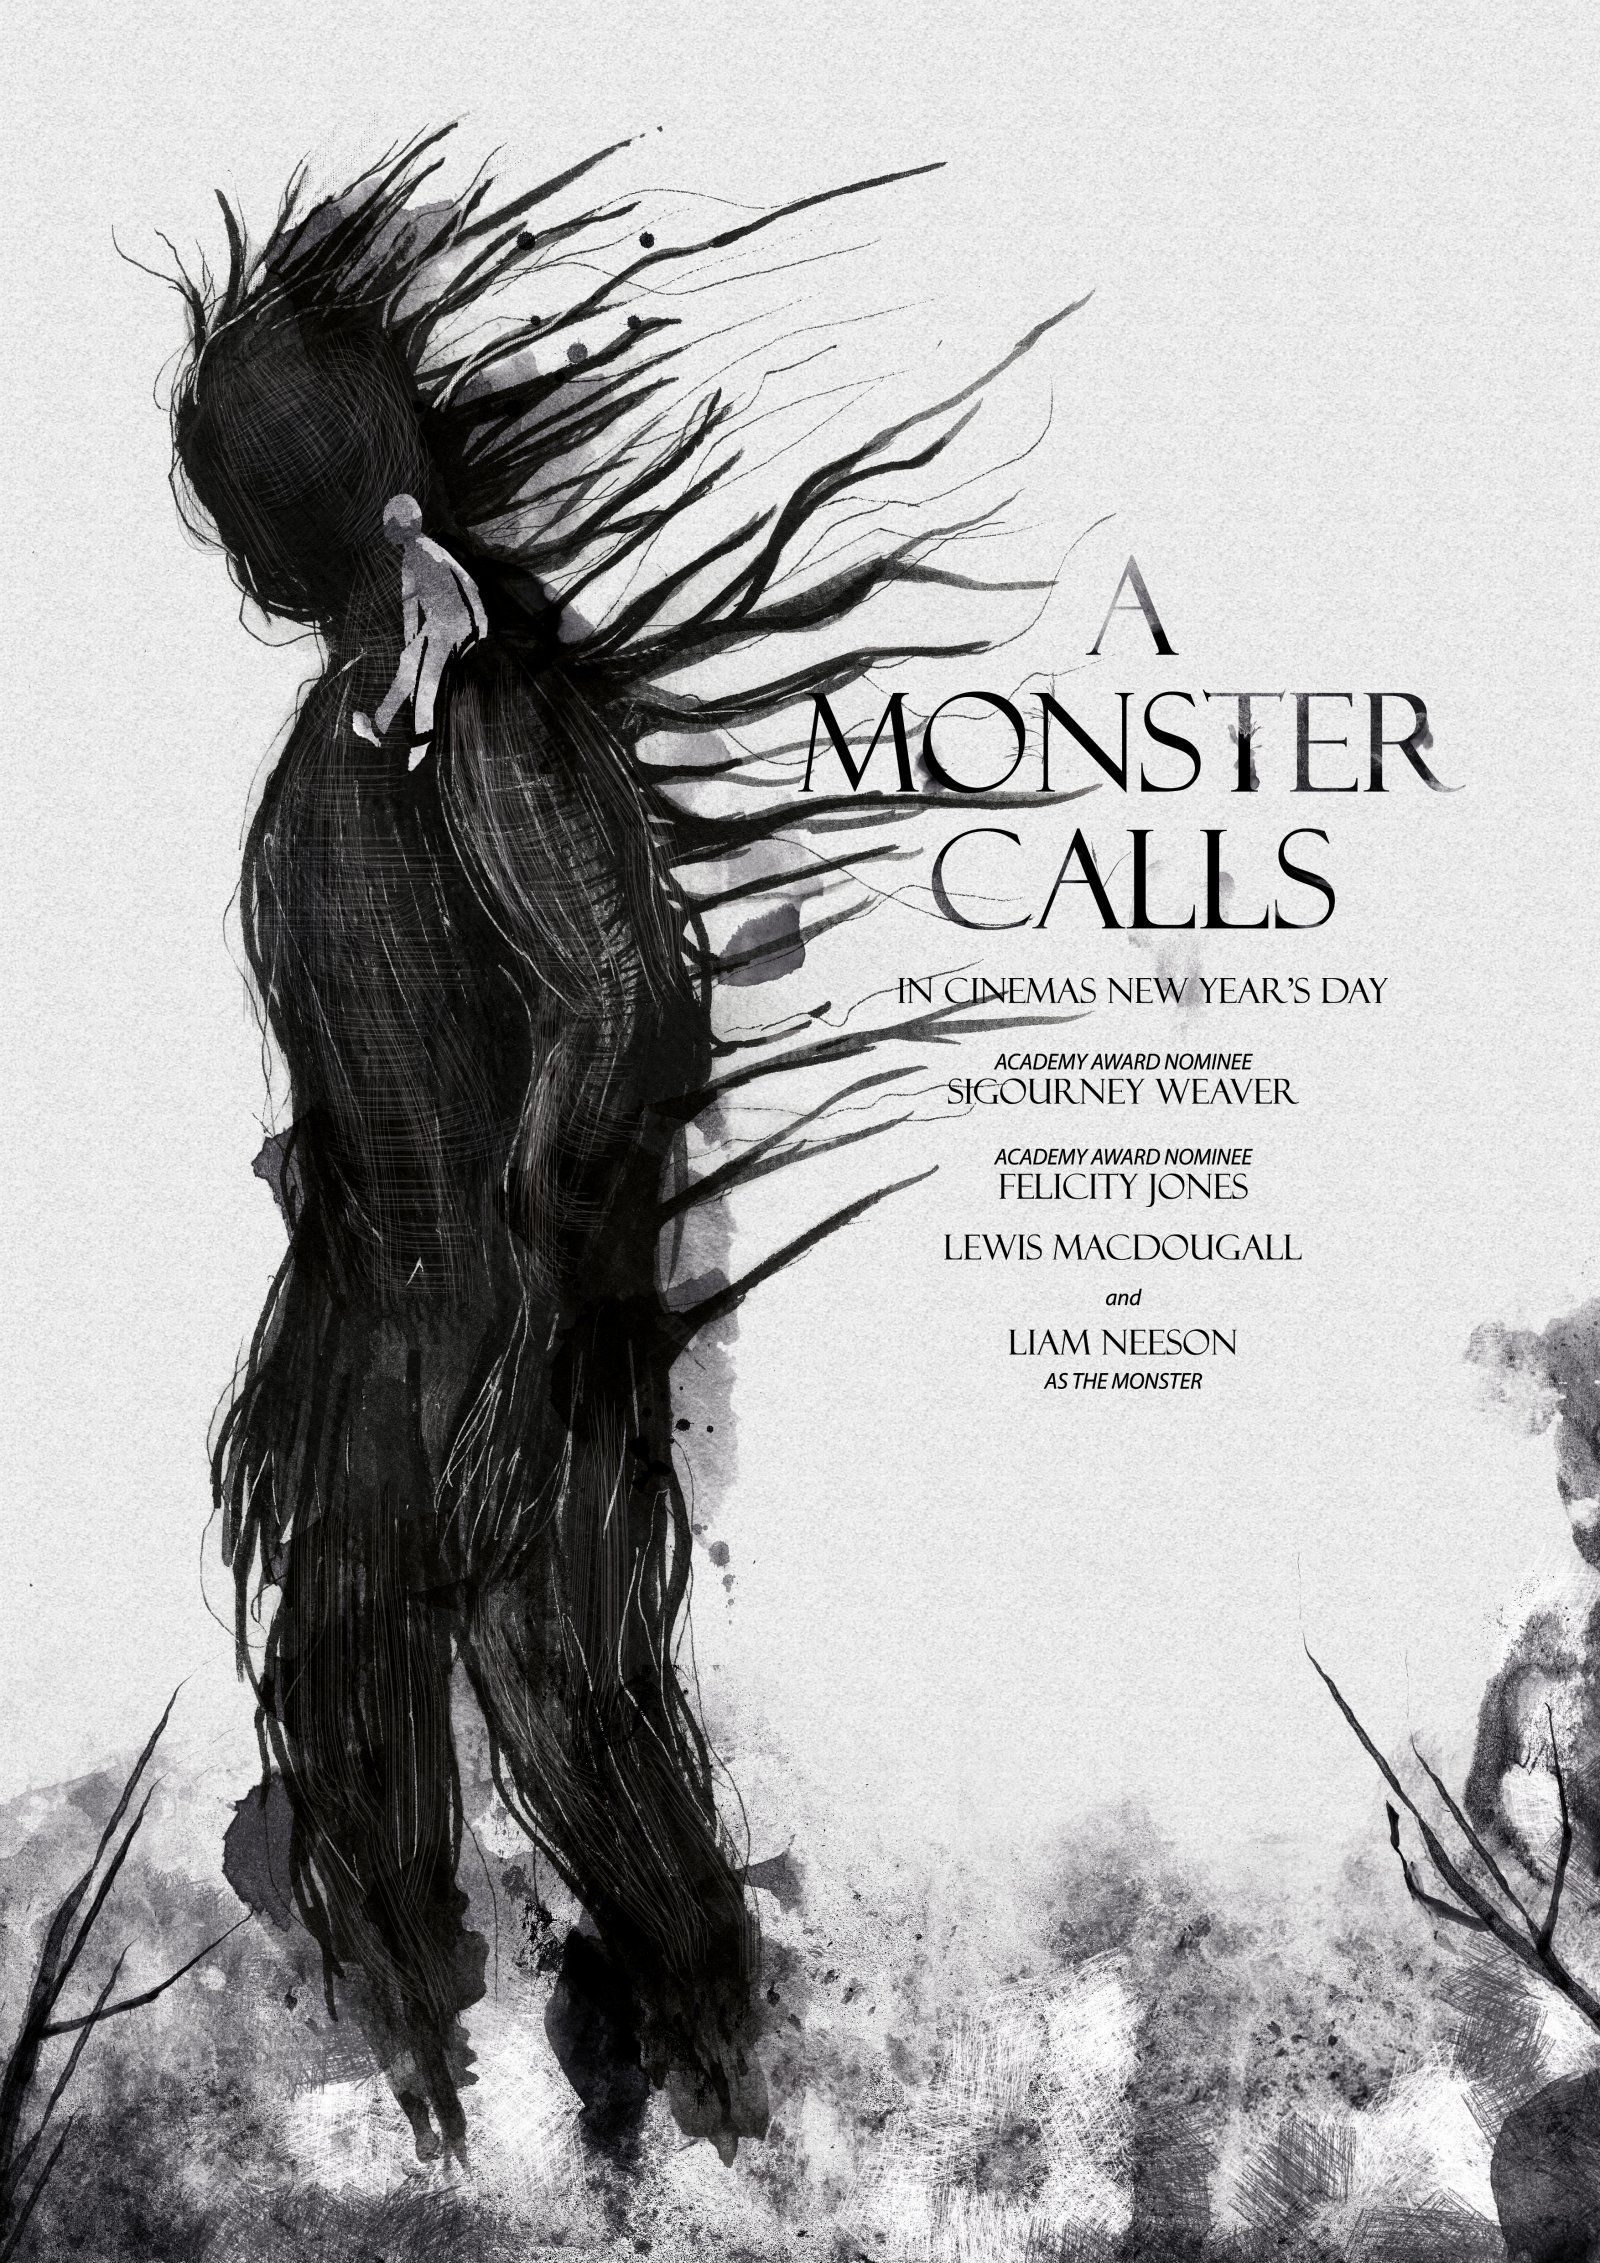 A Monster Cales Quelques Minutes Apres Minuit Juan Antonio Bayona 2017 A Monster Calls Movie Poster Art Monster